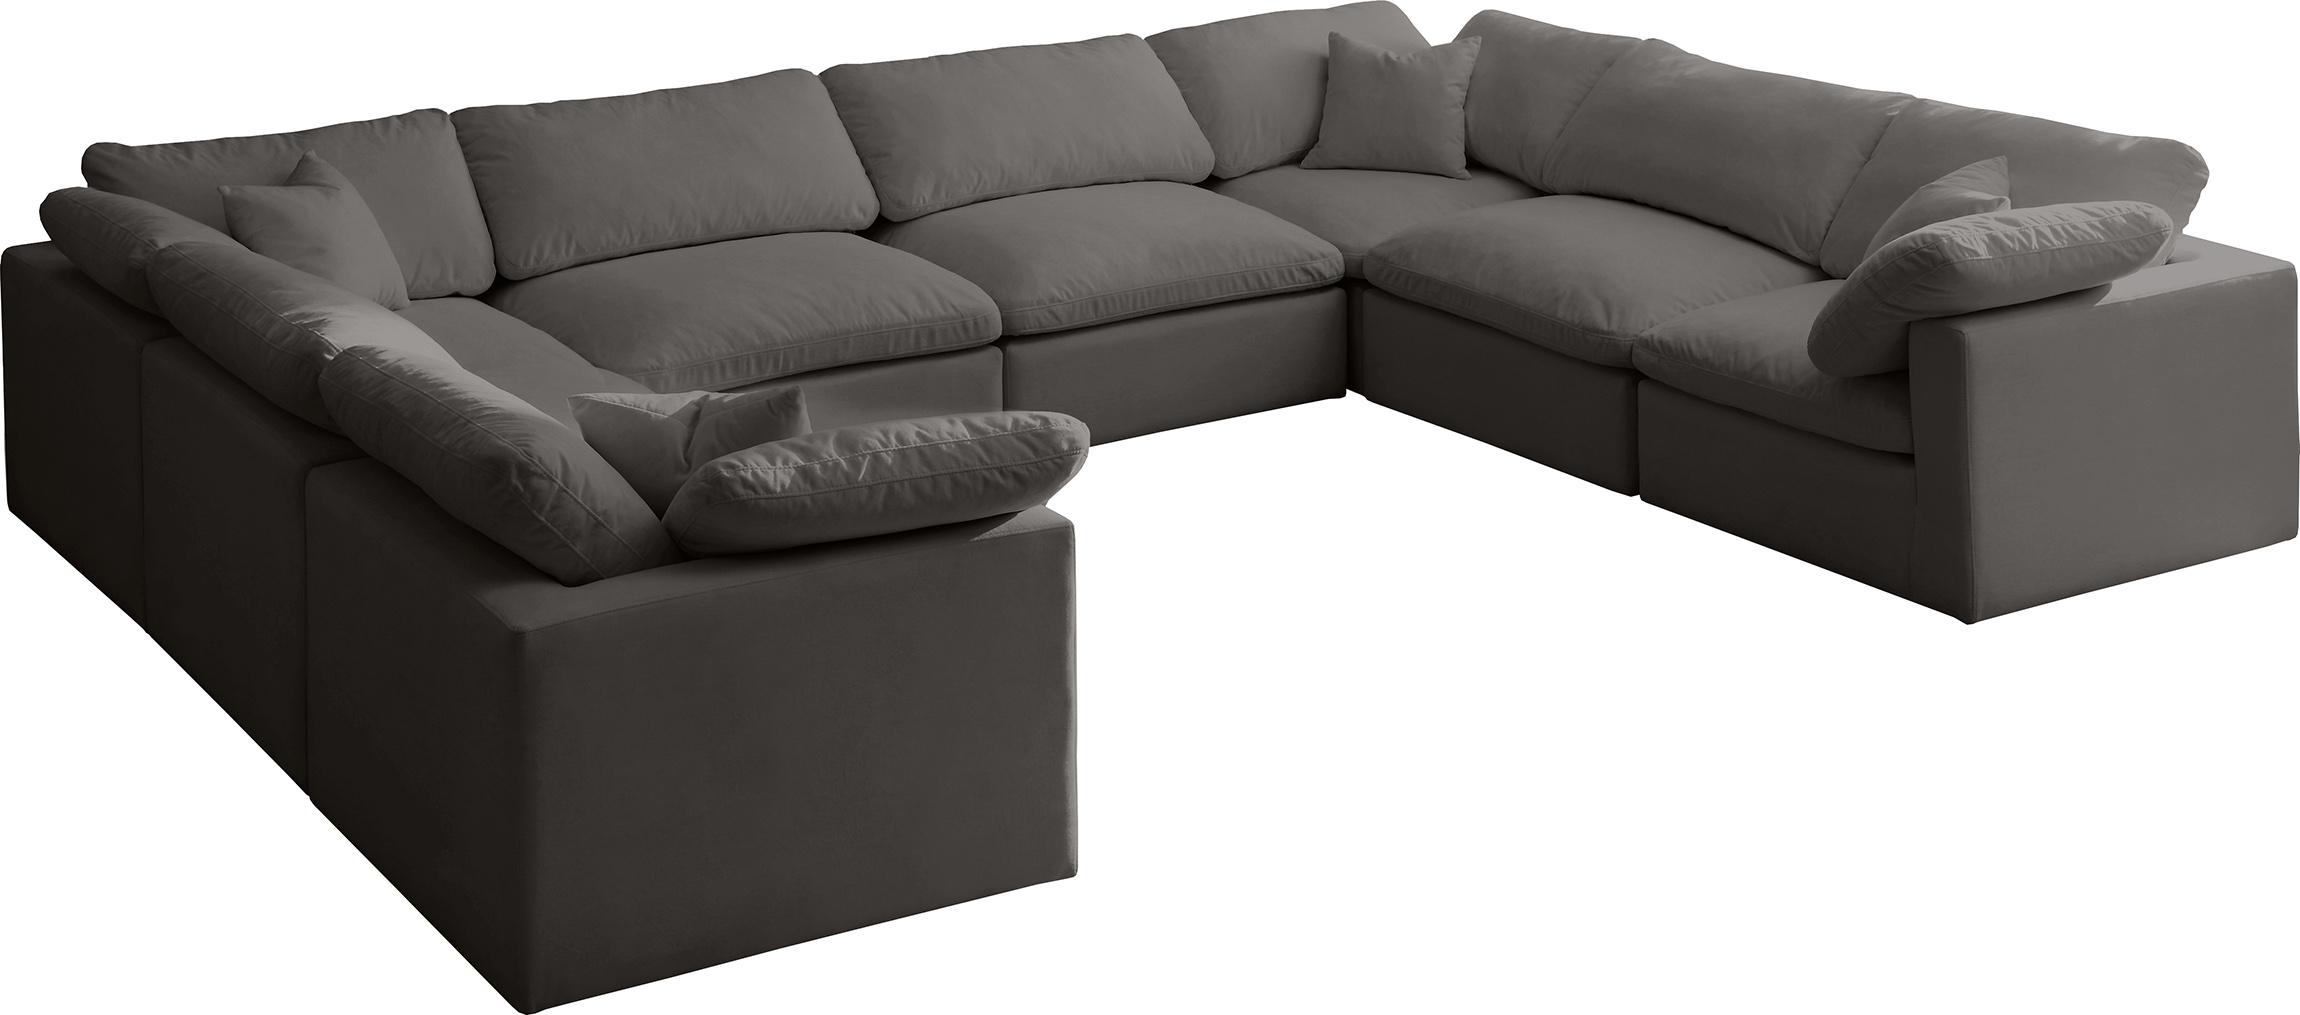 Contemporary, Modern Modular Sectional Sofa 602Grey-Sec8A 602Grey-Sec8A in Gray Fabric